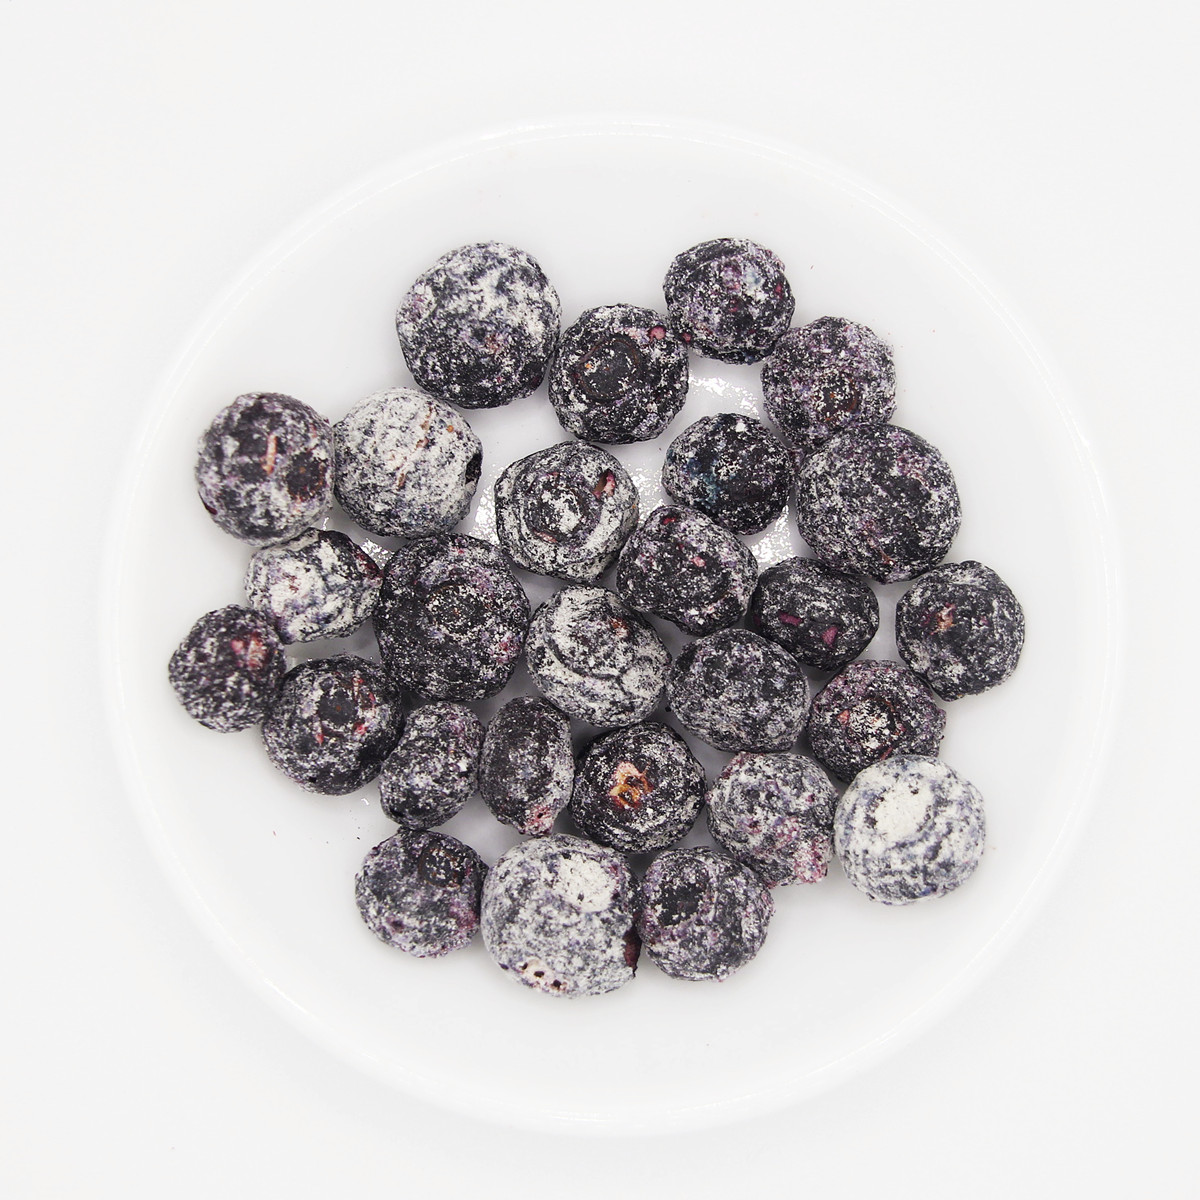 Freeze Dried Probiotic Blueberry $40 lb